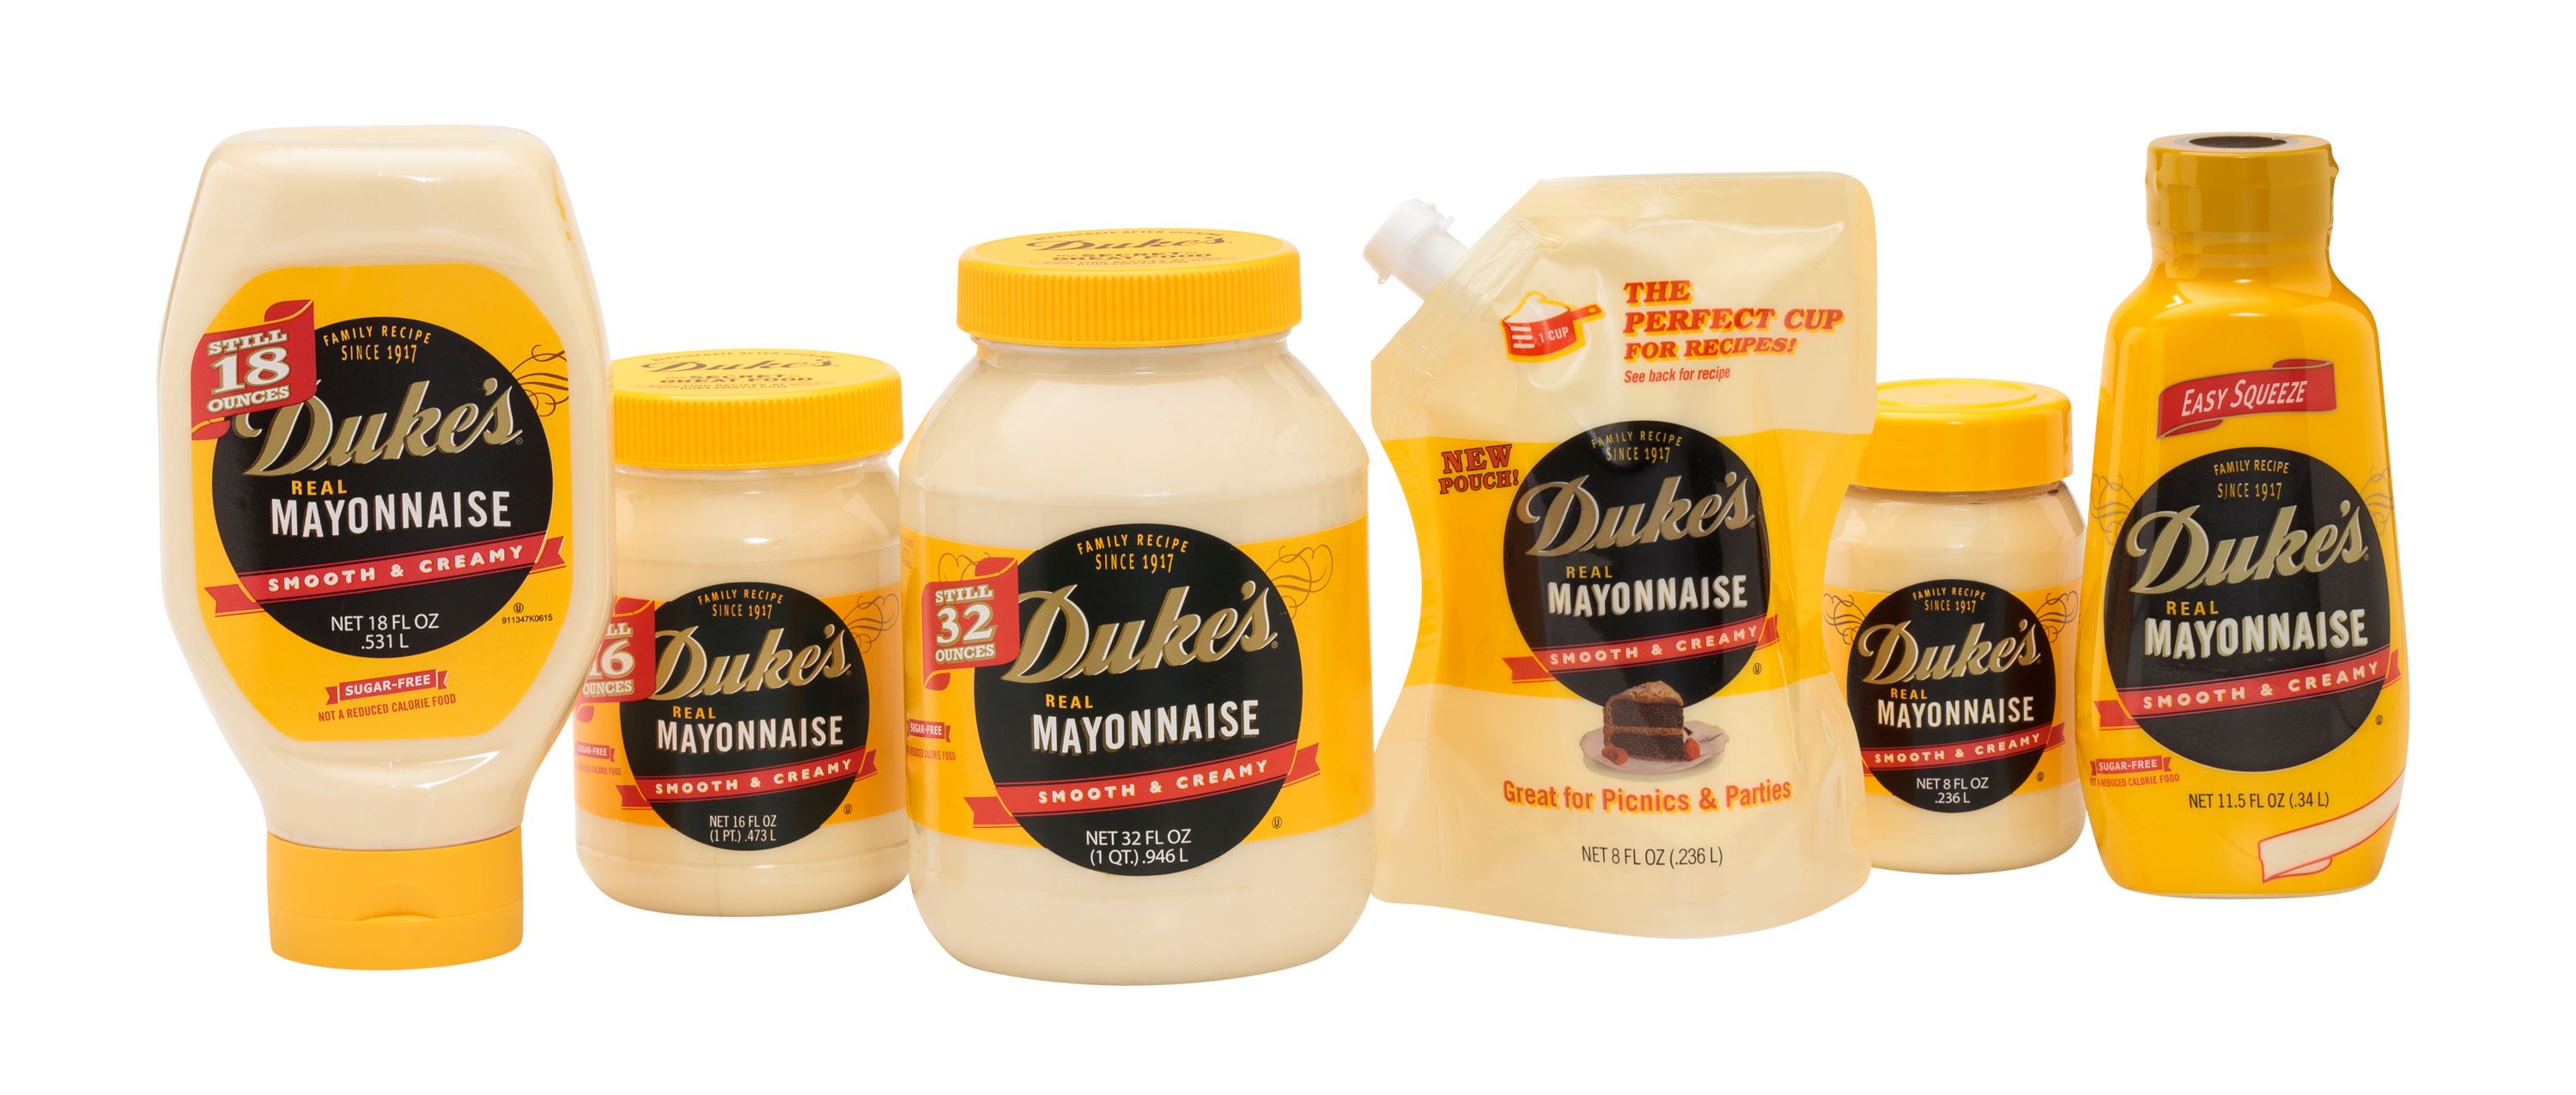 Sauer Duke's Mayonnaise